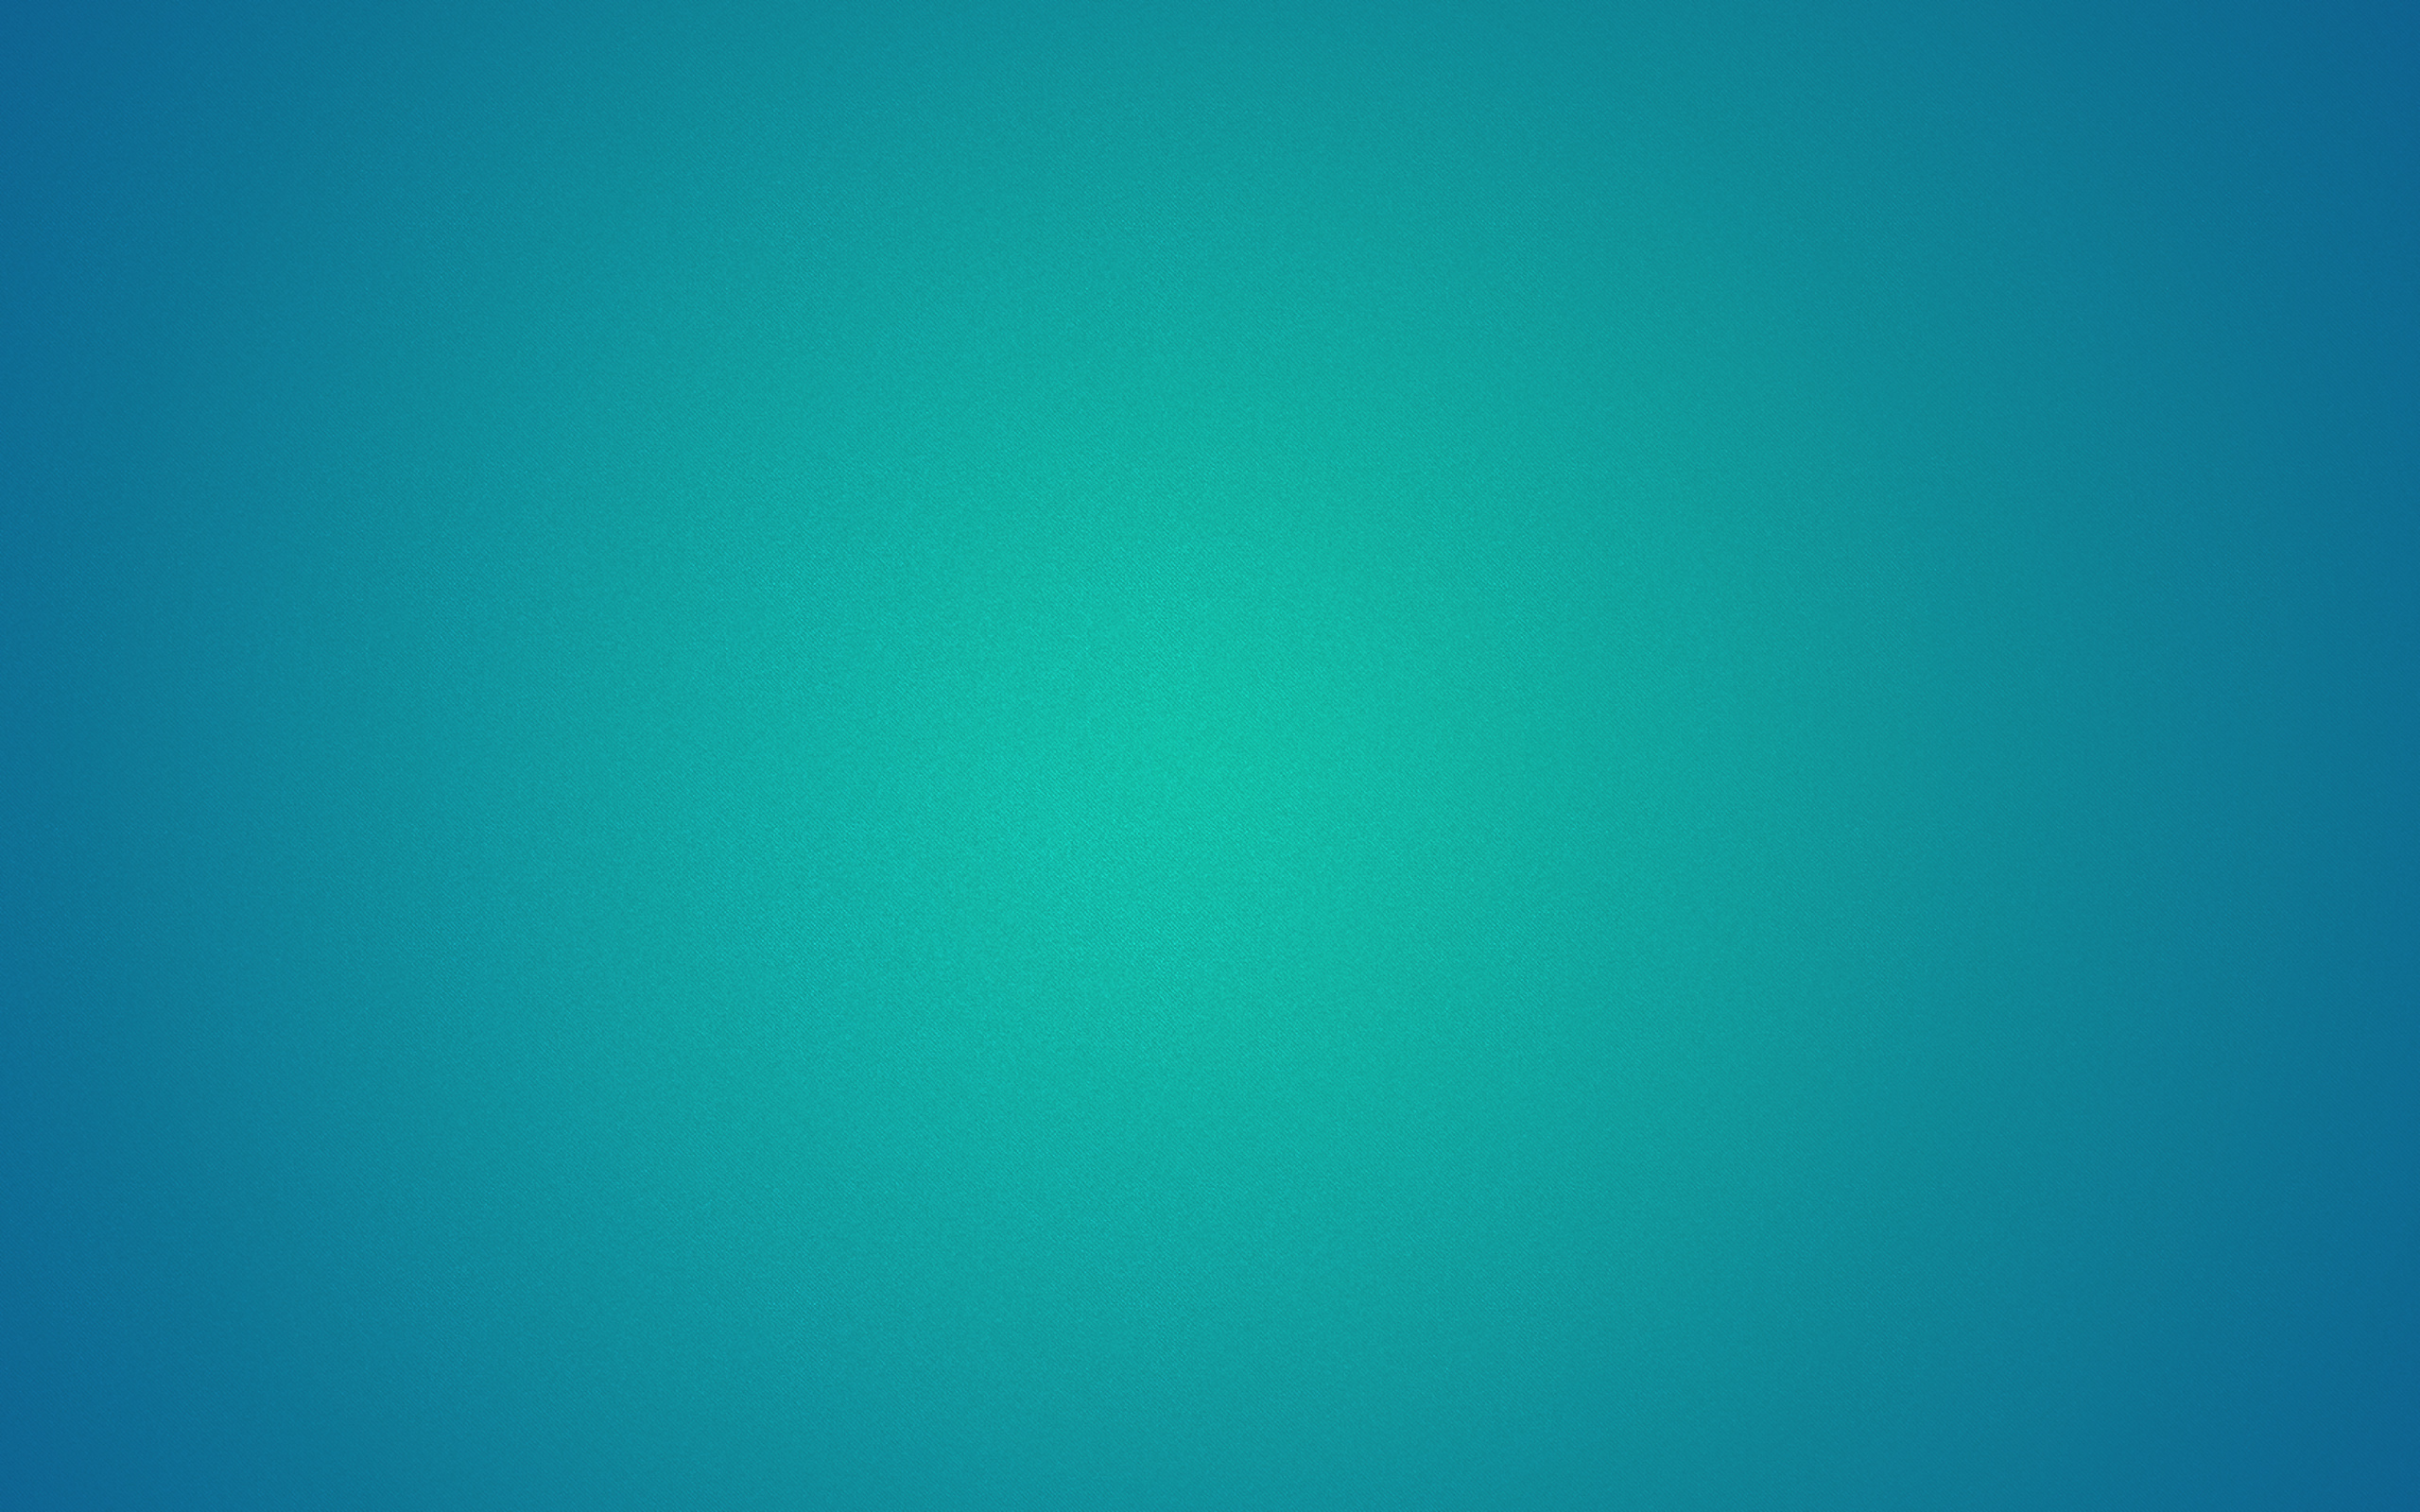 ubuntu gnome wallpaper,blau,grün,aqua,türkis,blaugrün